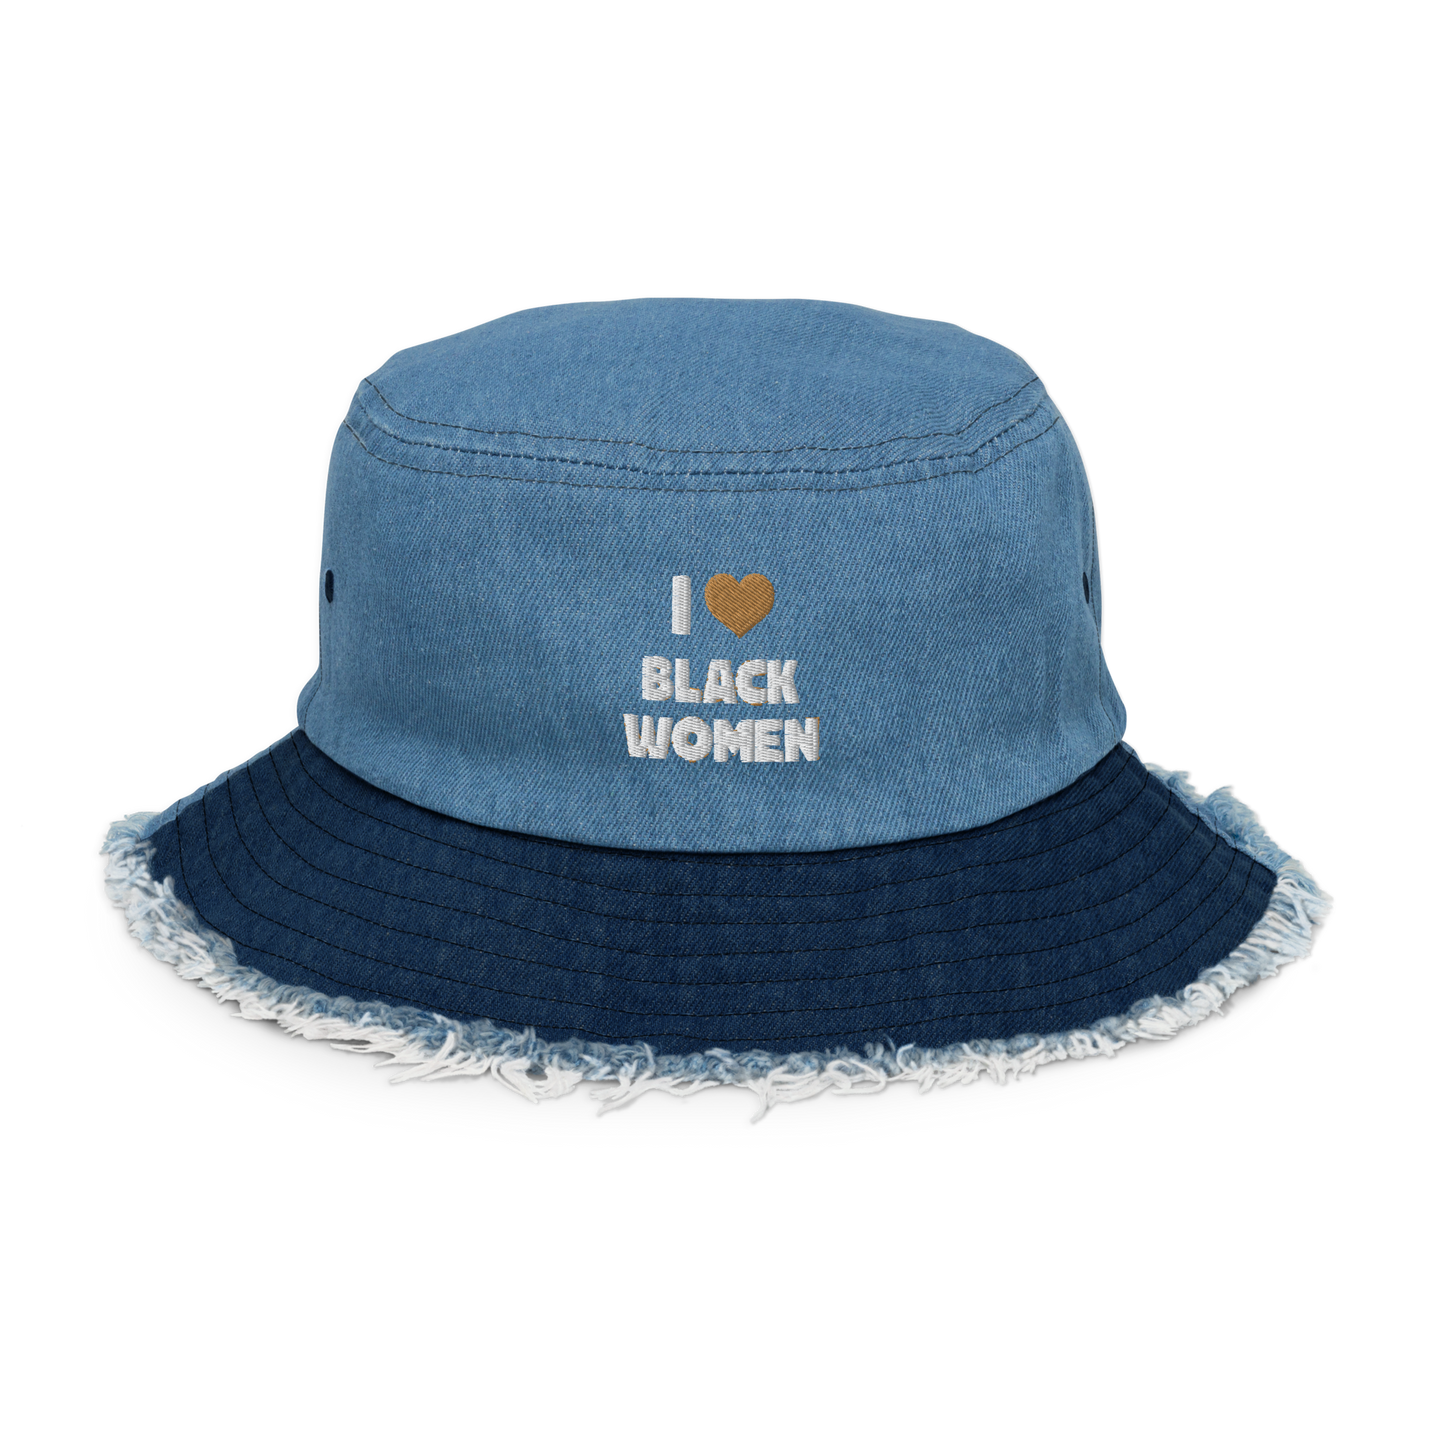 I Love Black Women Distressed Denim Bucket Hat